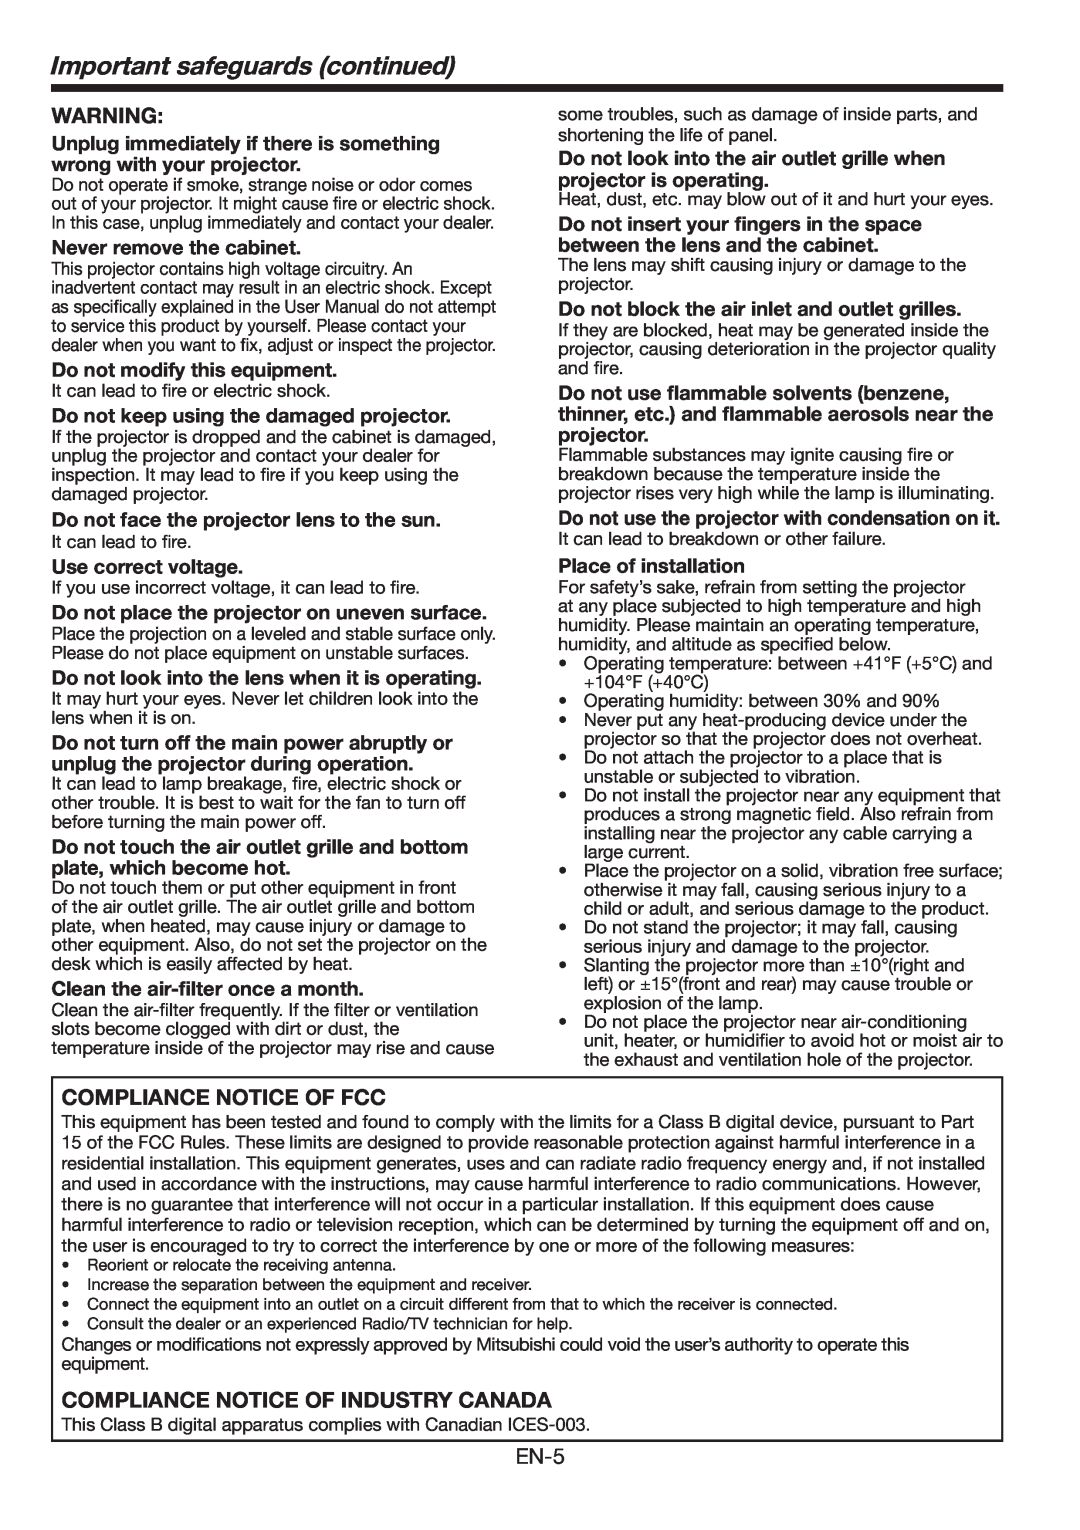 Mitsubishi Electronics FL6900U user manual Important safeguards continued, Compliance Notice Of Fcc 